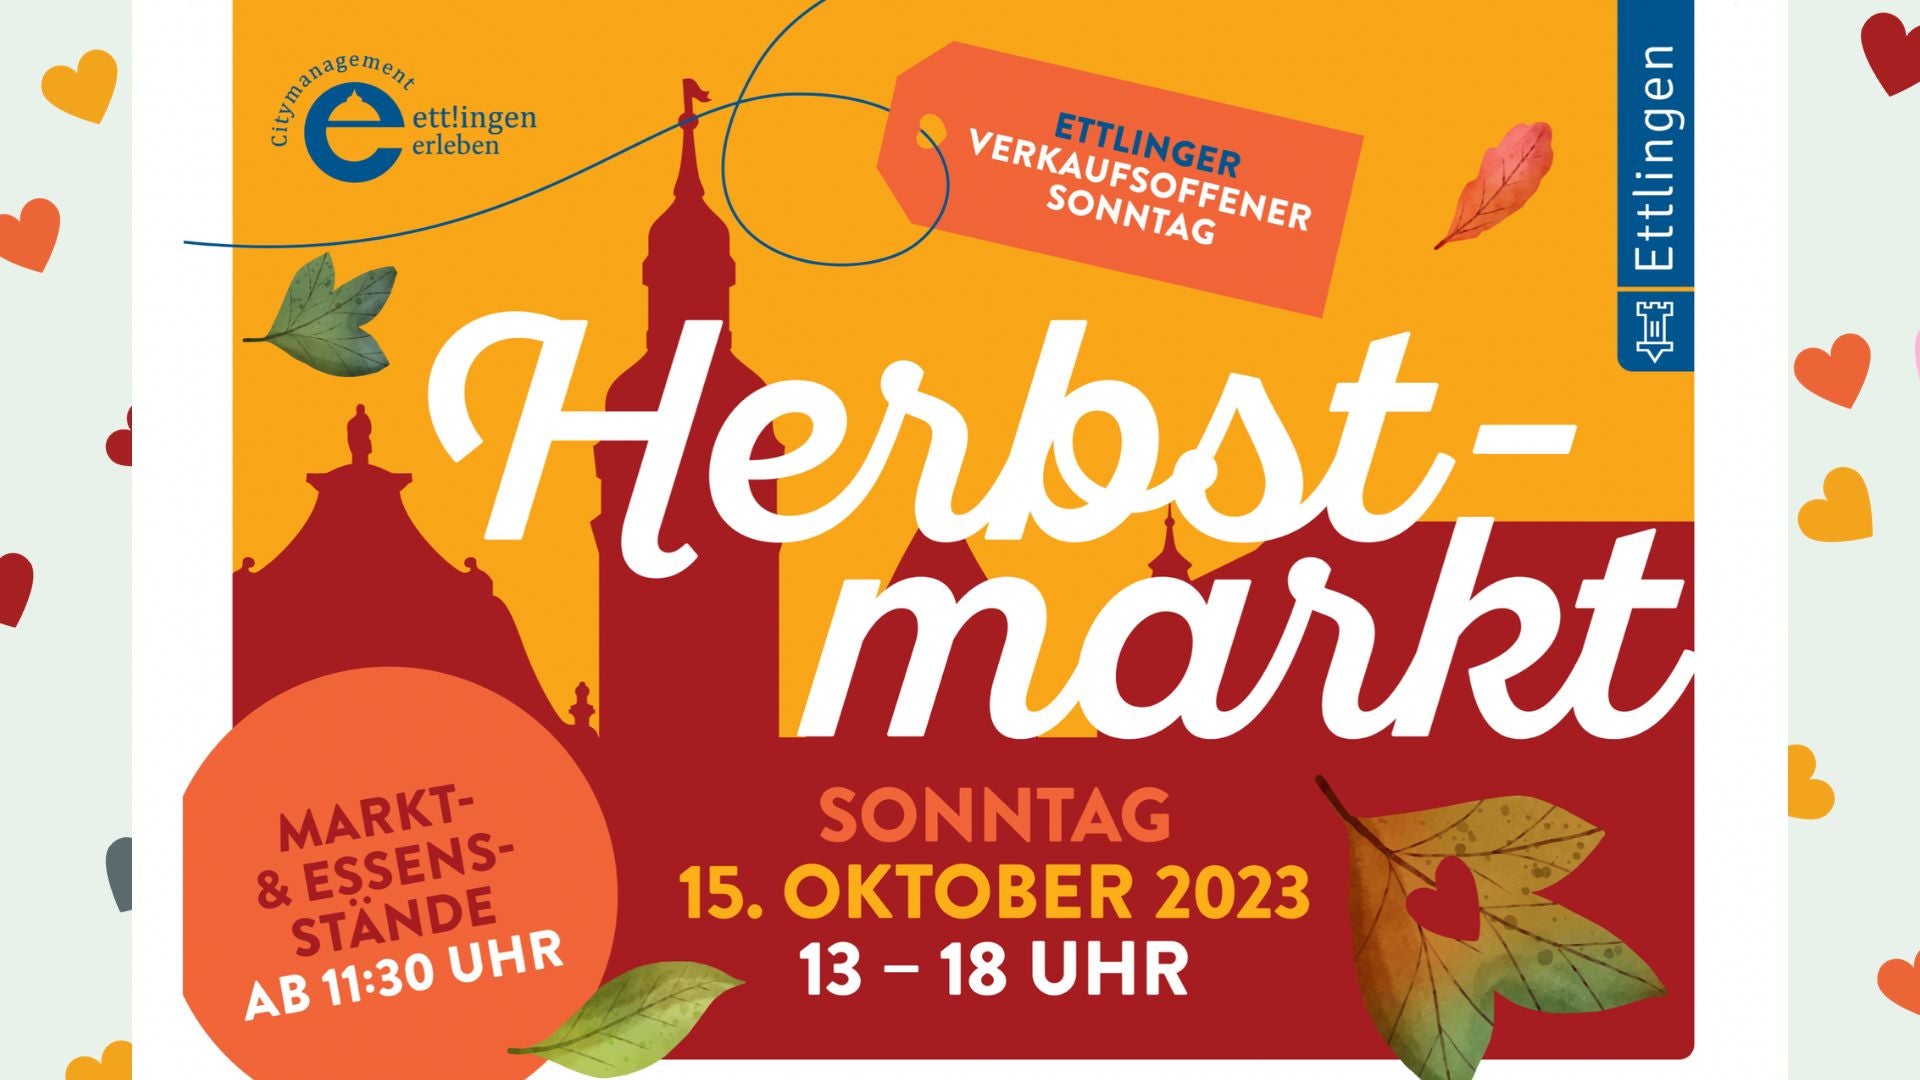 Verkaufsoffener Sonntag & Herbstmarkt in Ettlingen 15.Oktober 2023